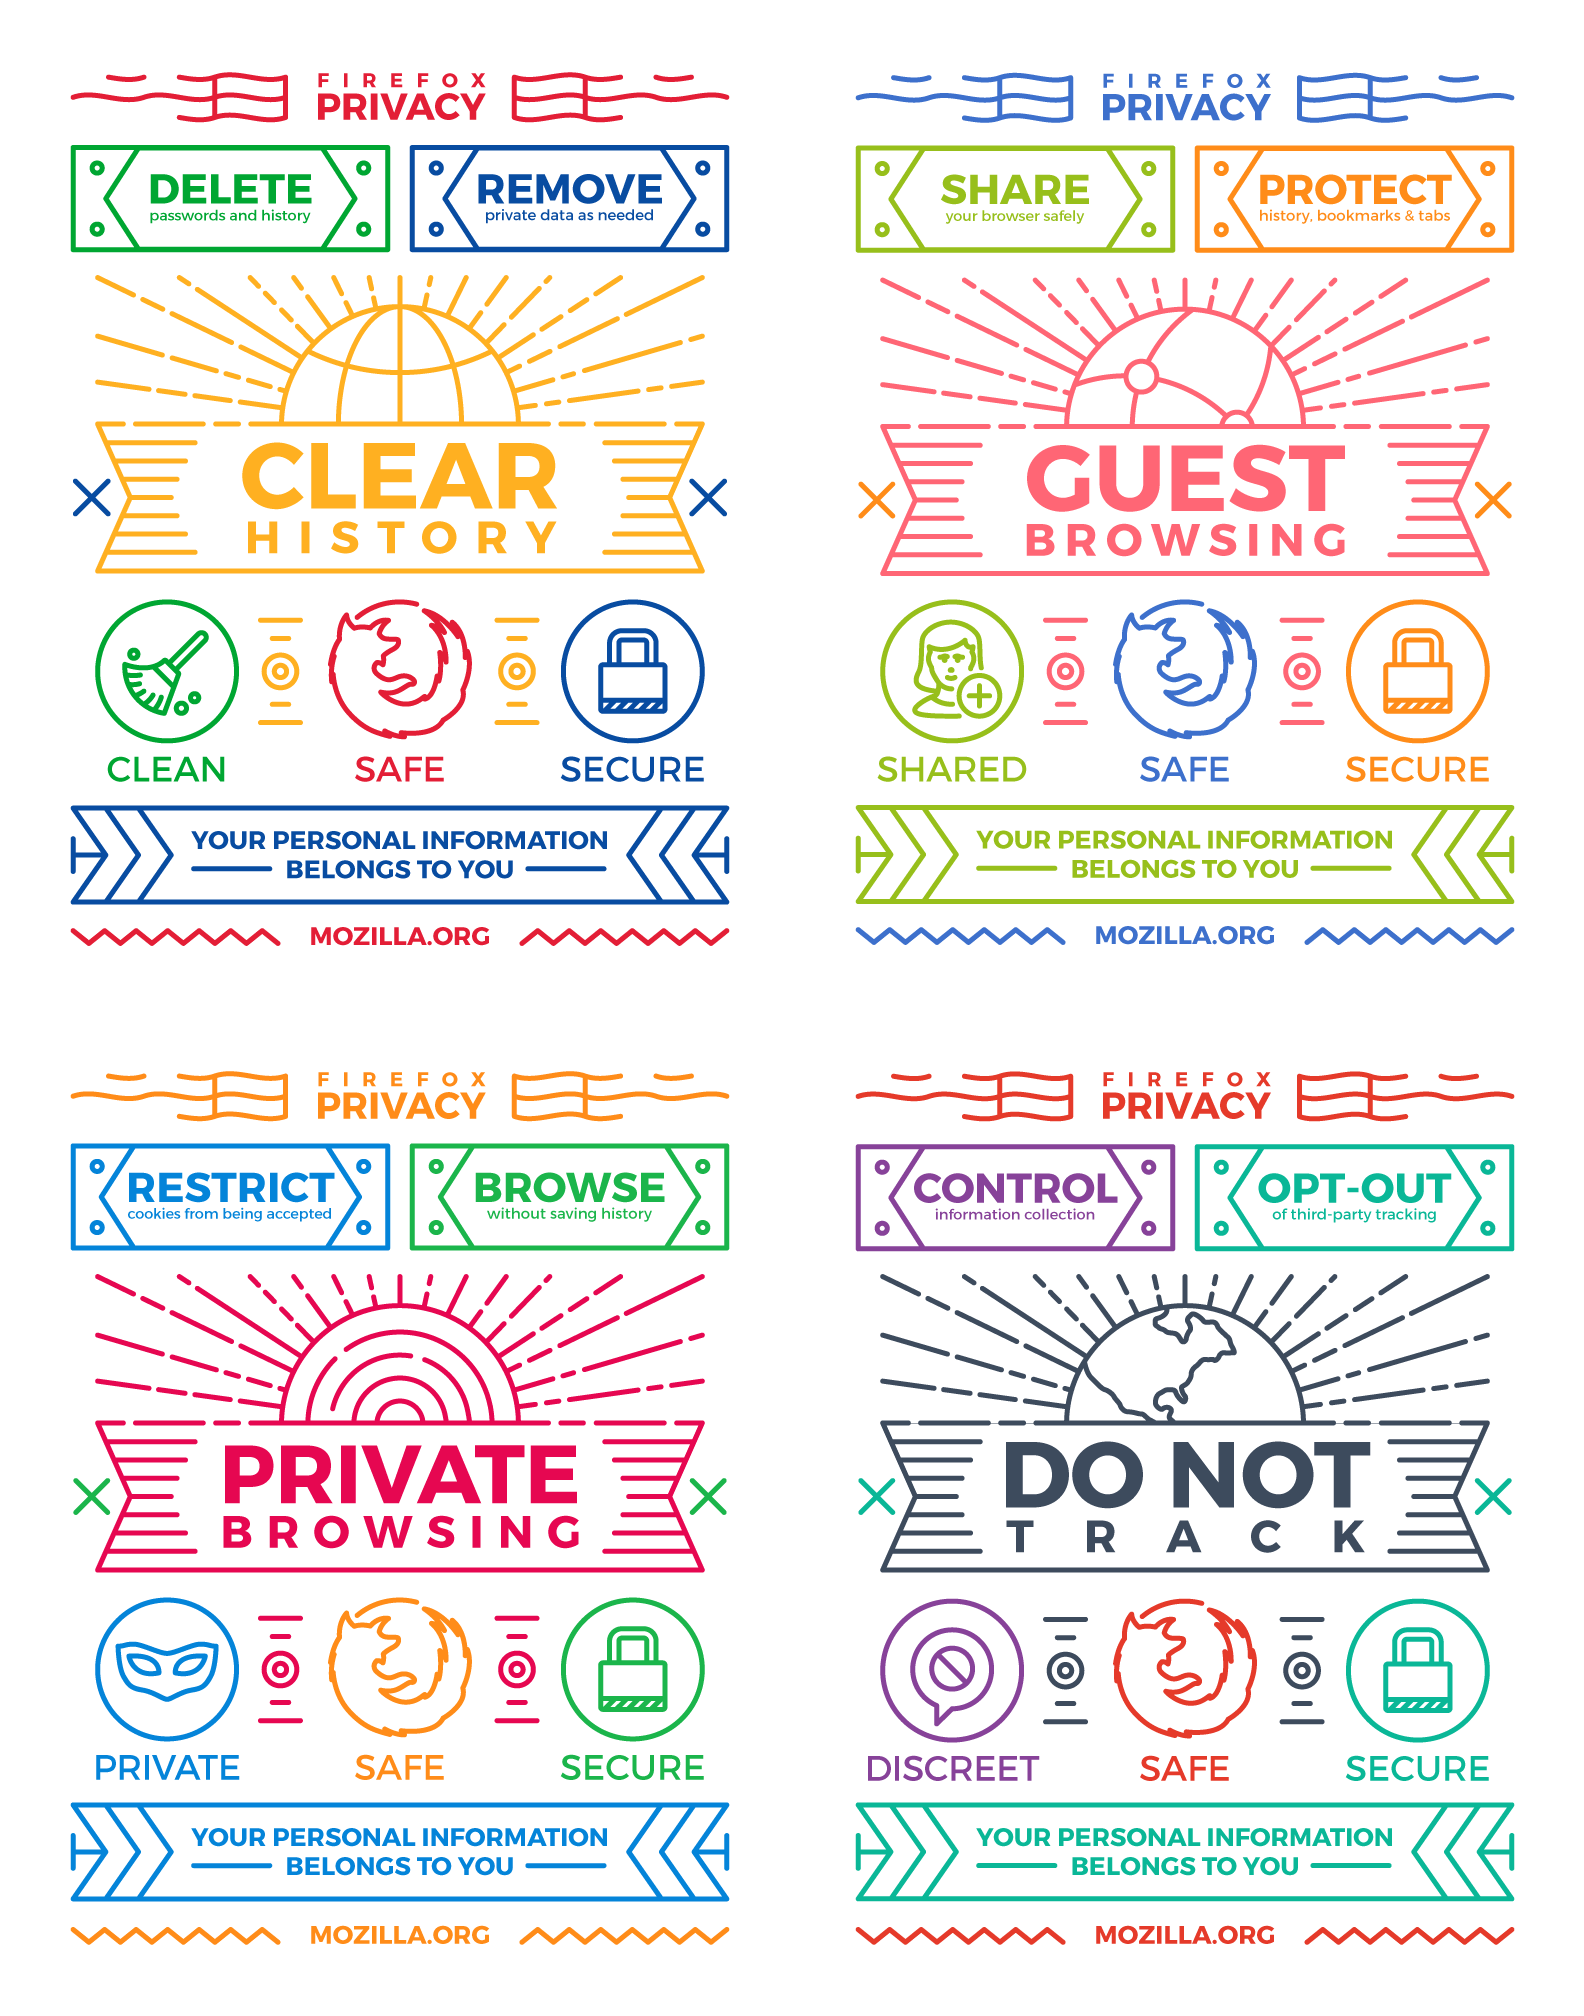 Michael Ham - Designerham - Mozilla Firefox - Privacy Poster Series